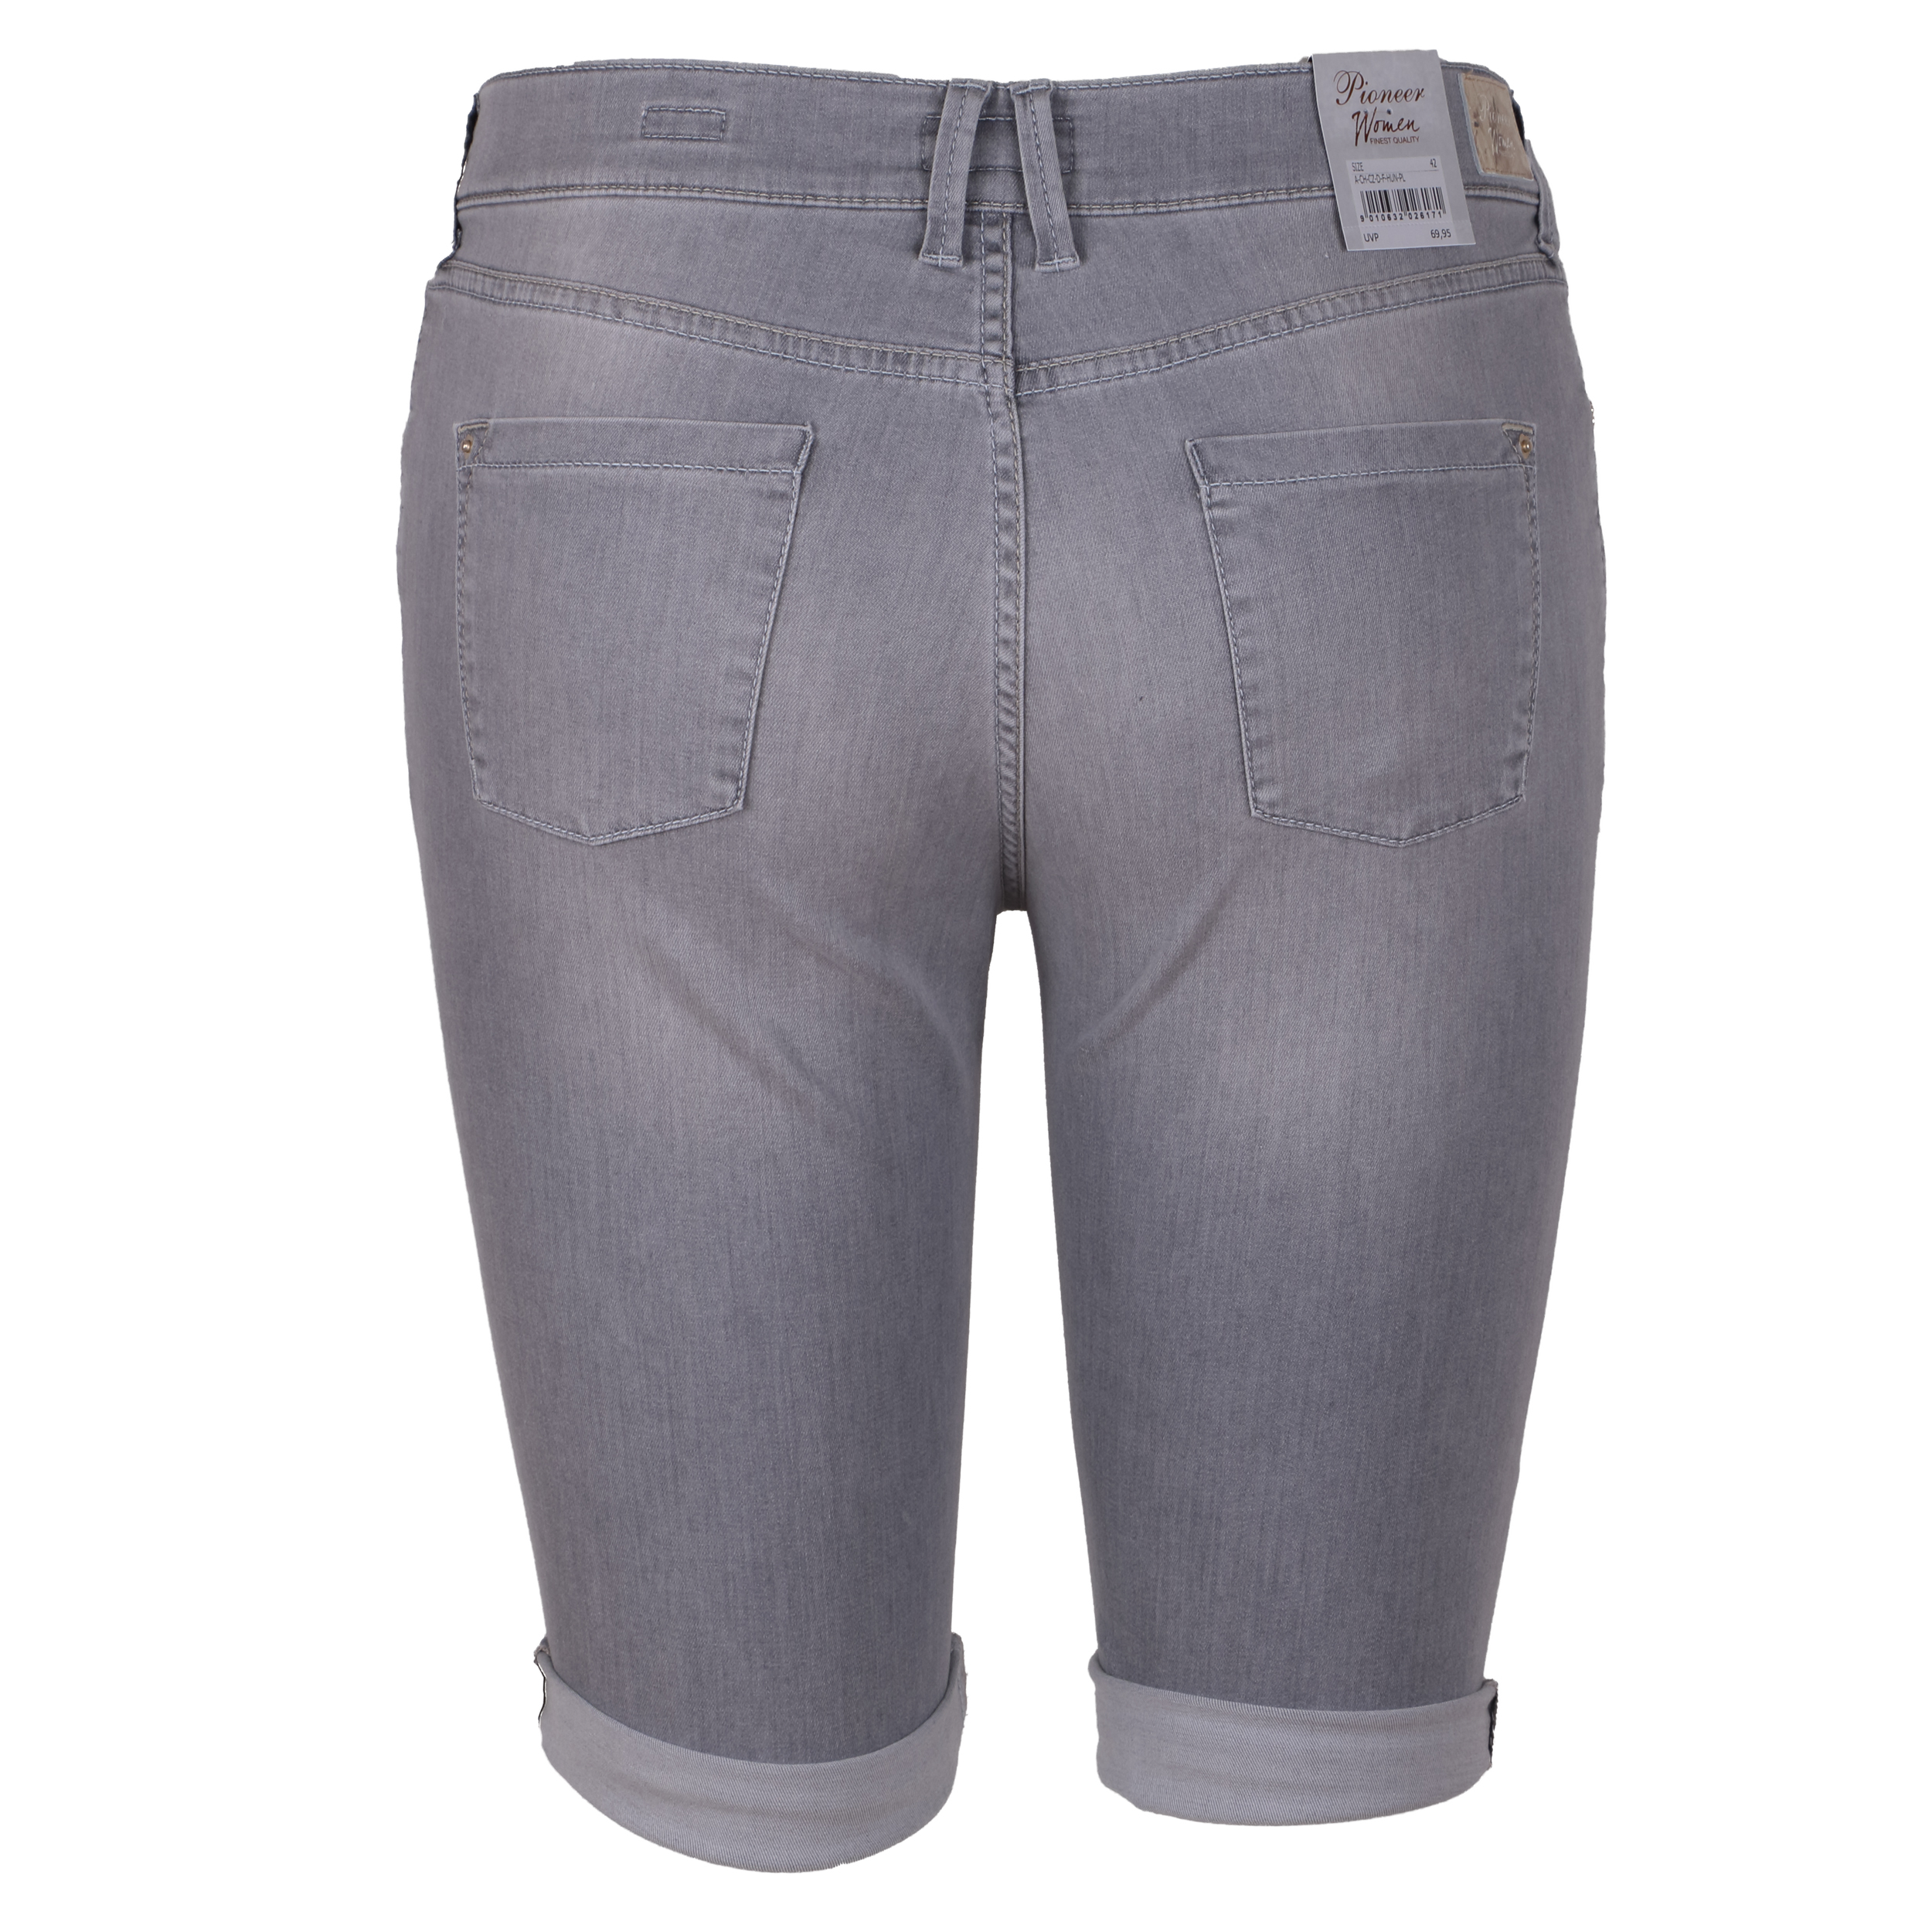 Pioneer Damen Jeans-Shorts 40 grau